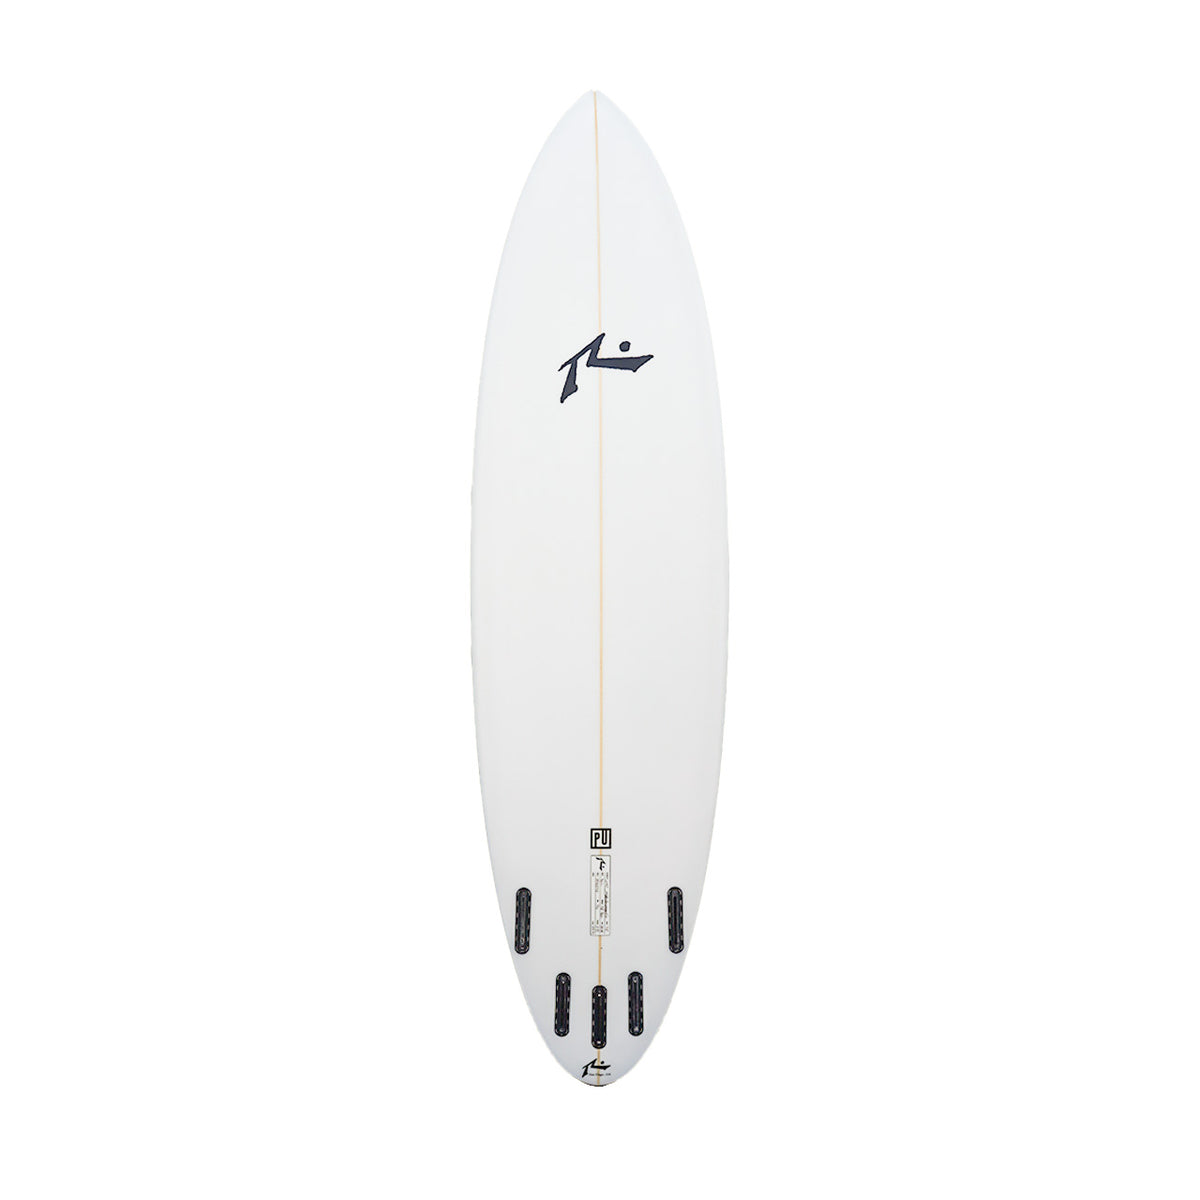 Yeti - Big Board - Bottom View - Rusty Surfboards